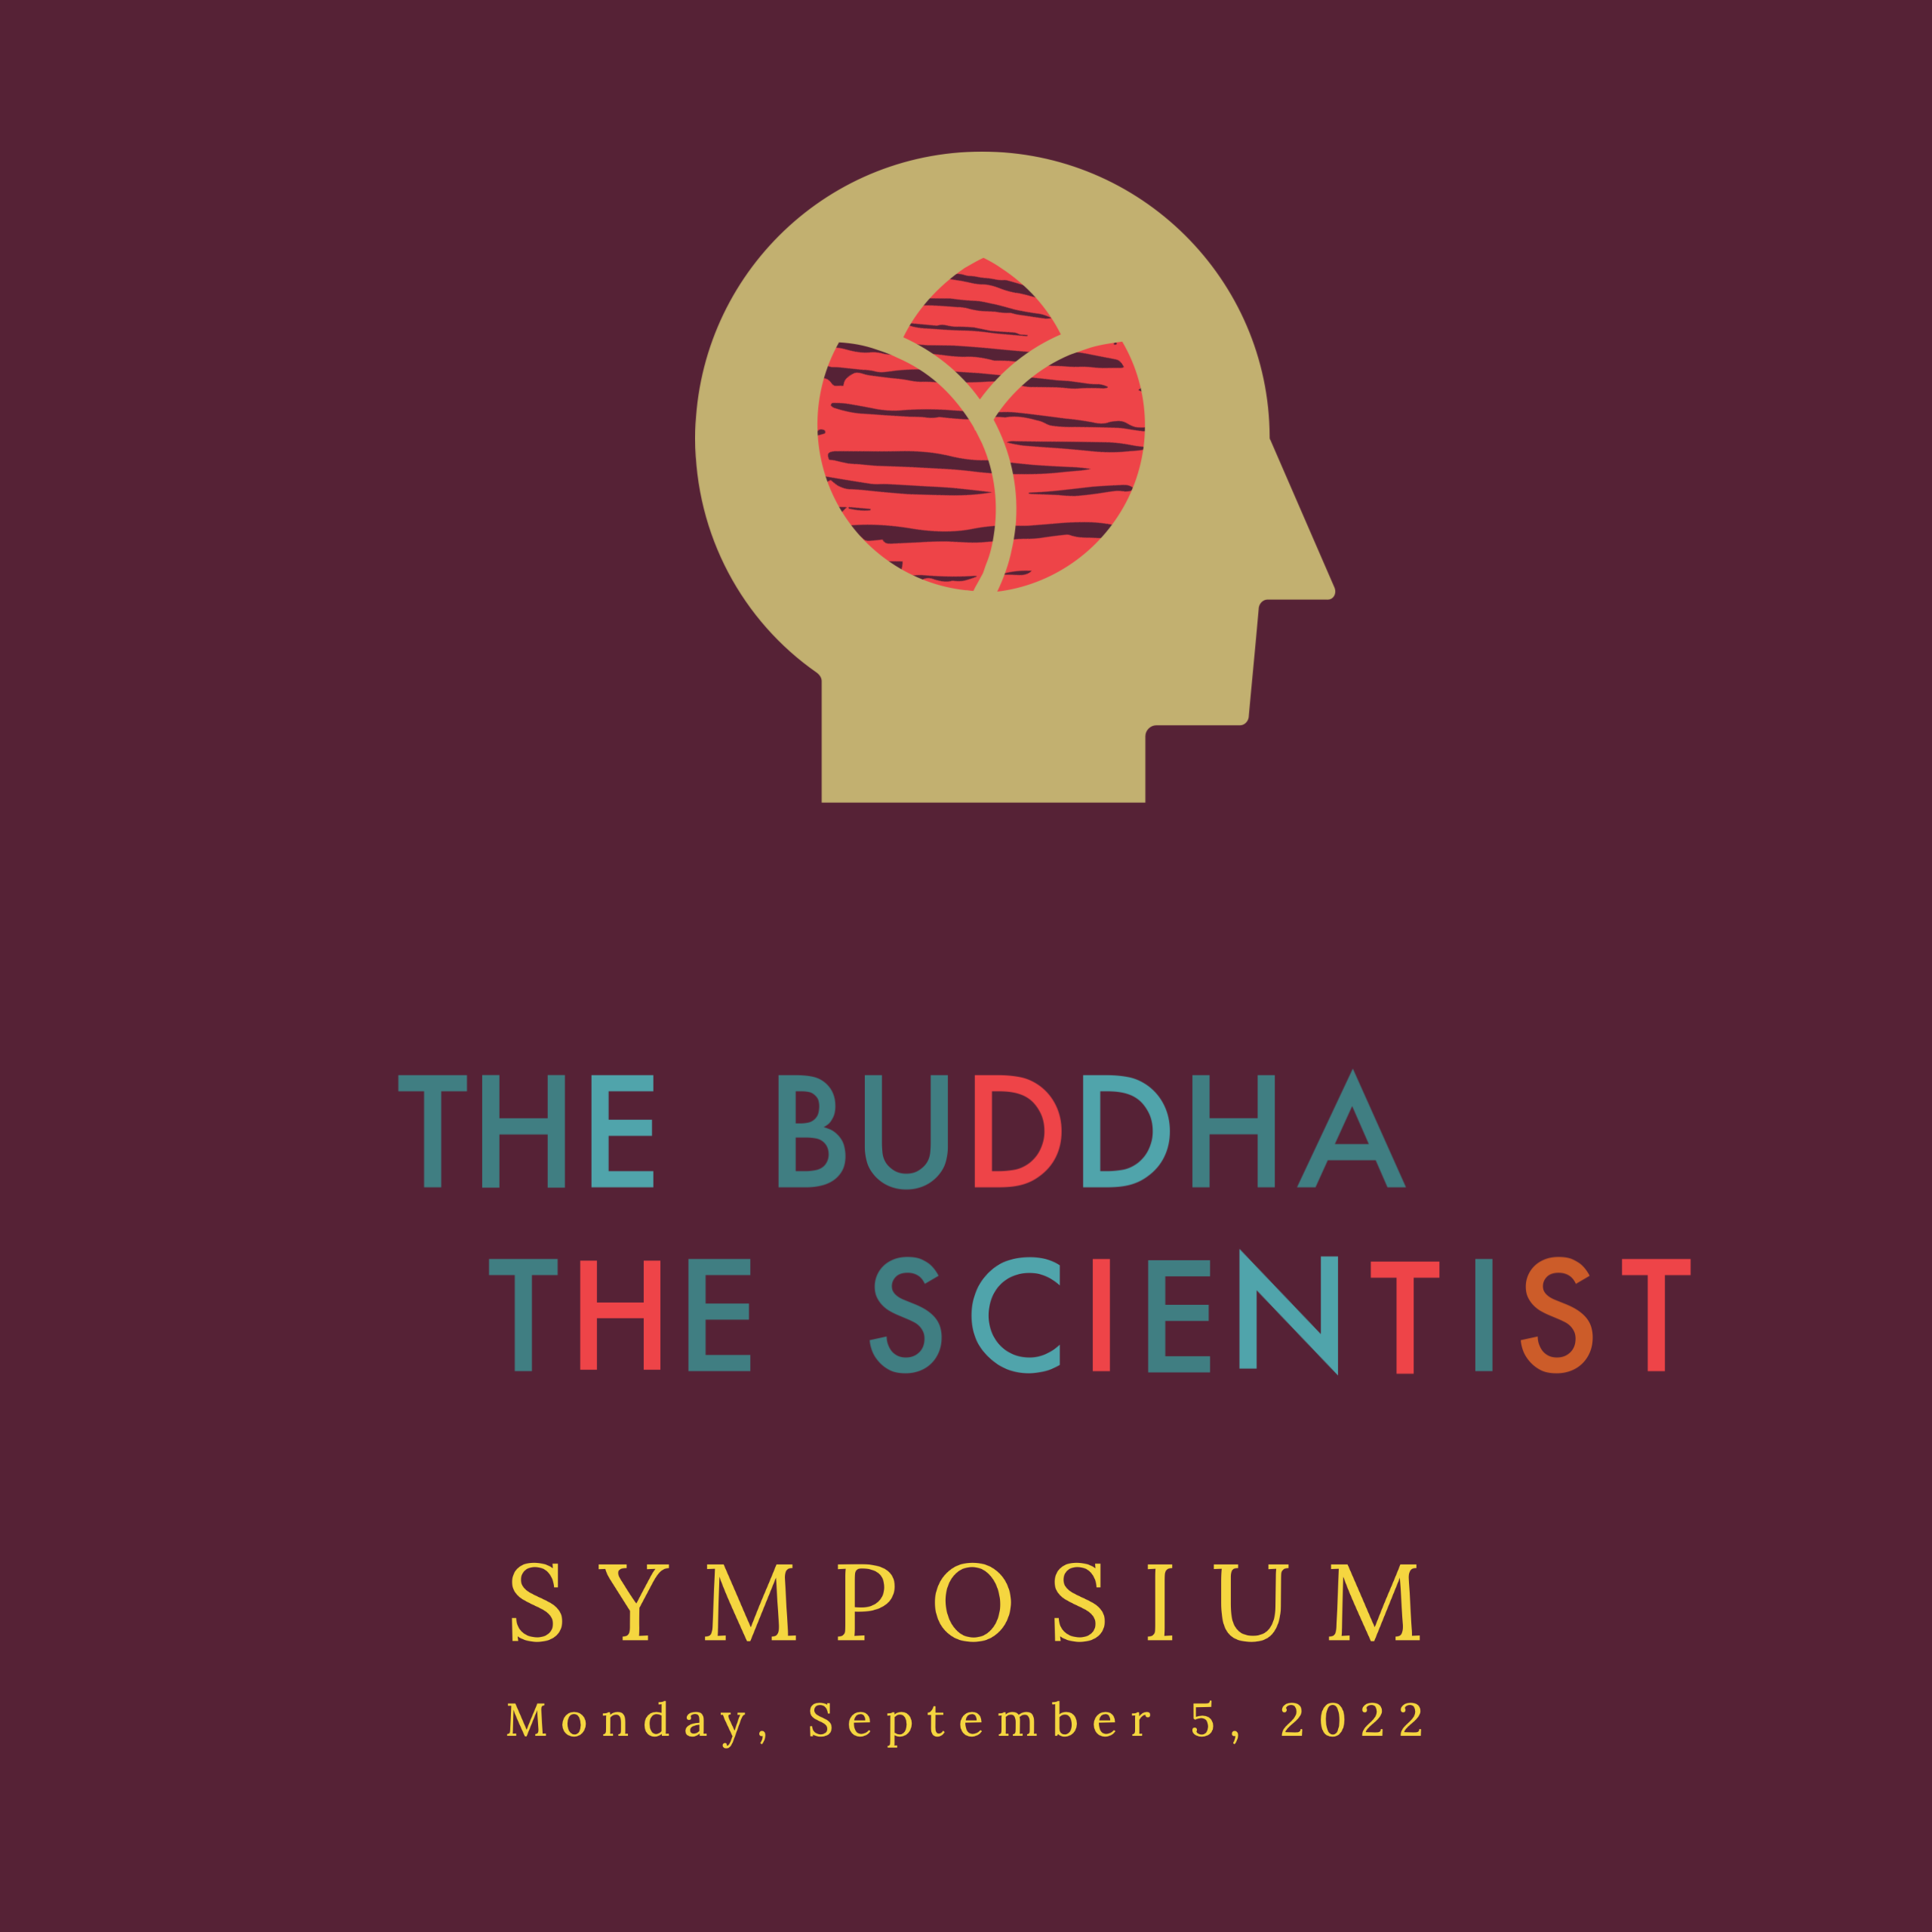 The Buddha the Scientist Symposium logo